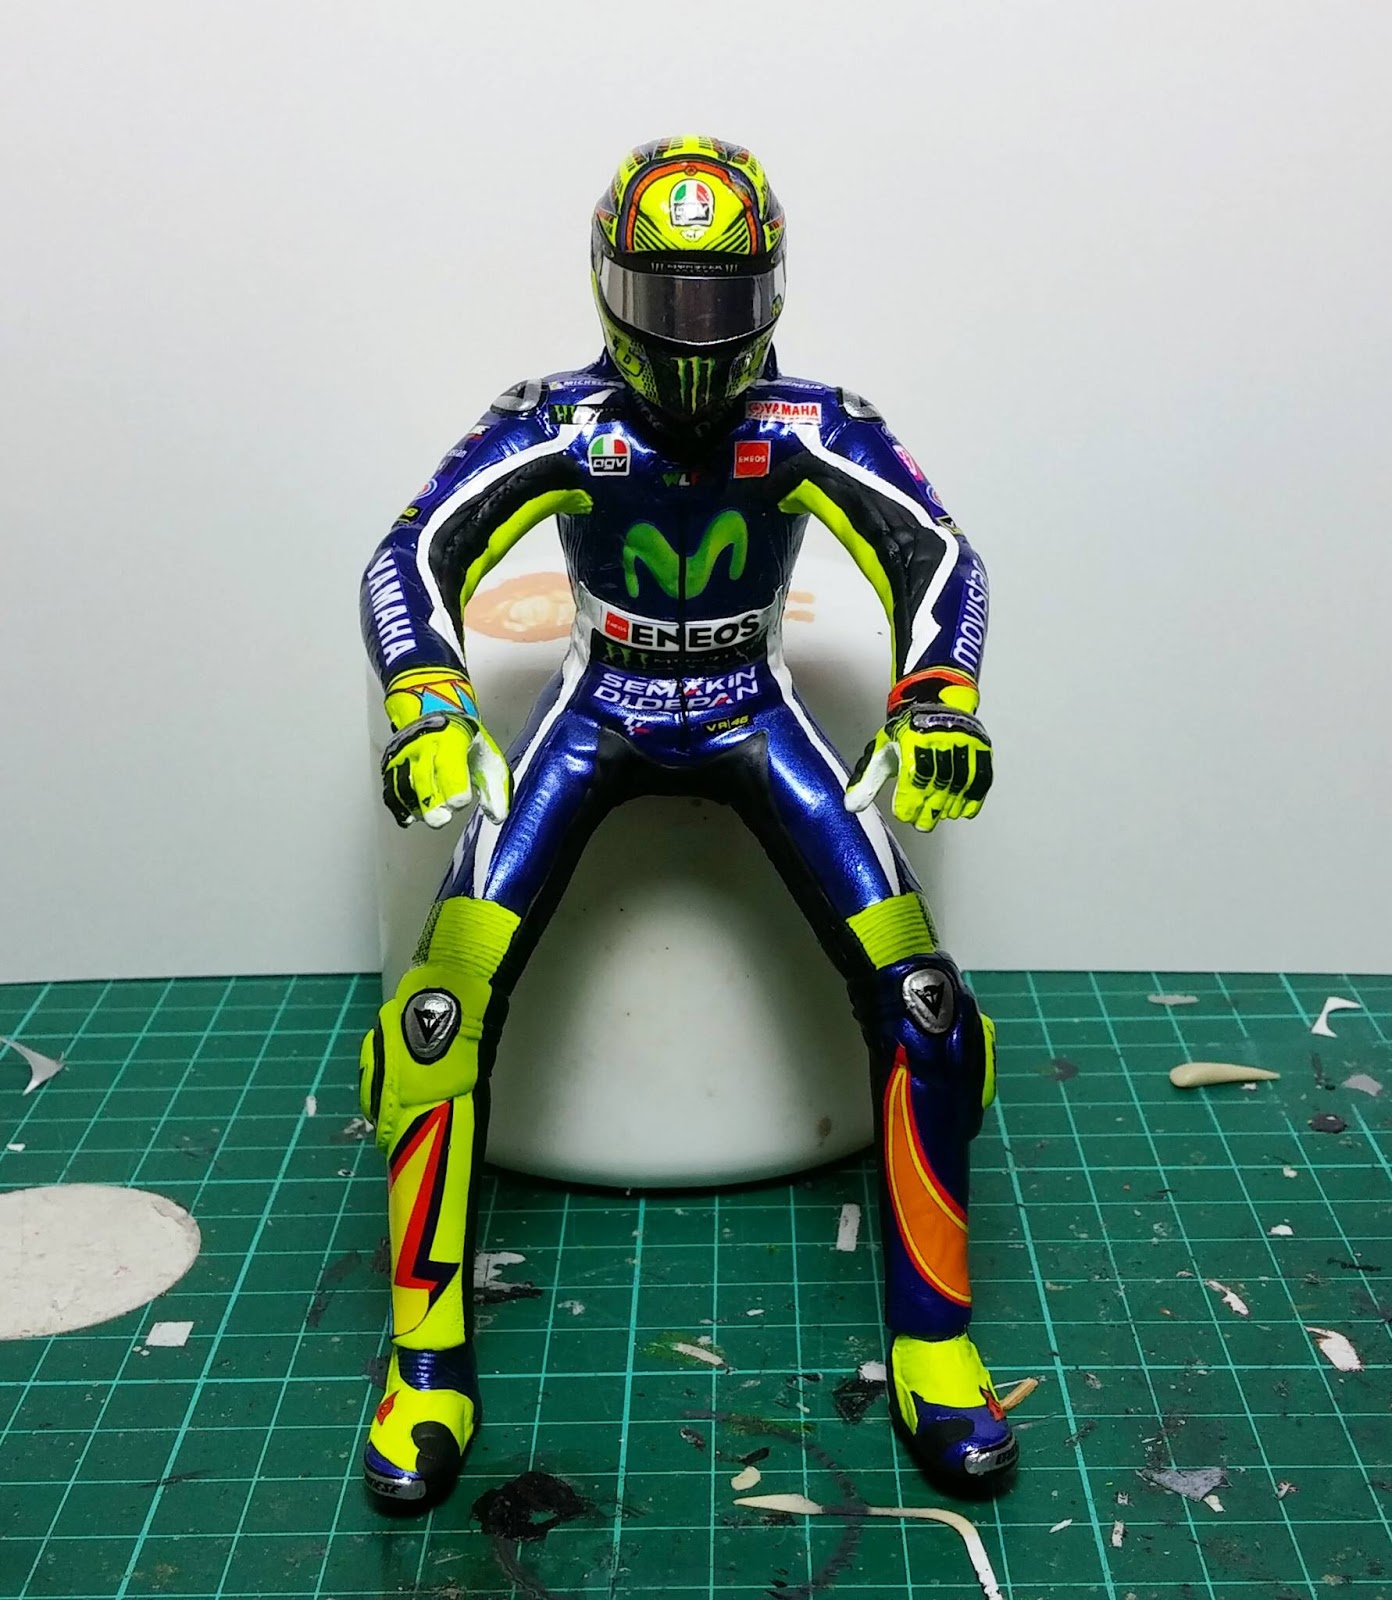 eFWoRks: #VR46 2016 racing suit 1/12 scale